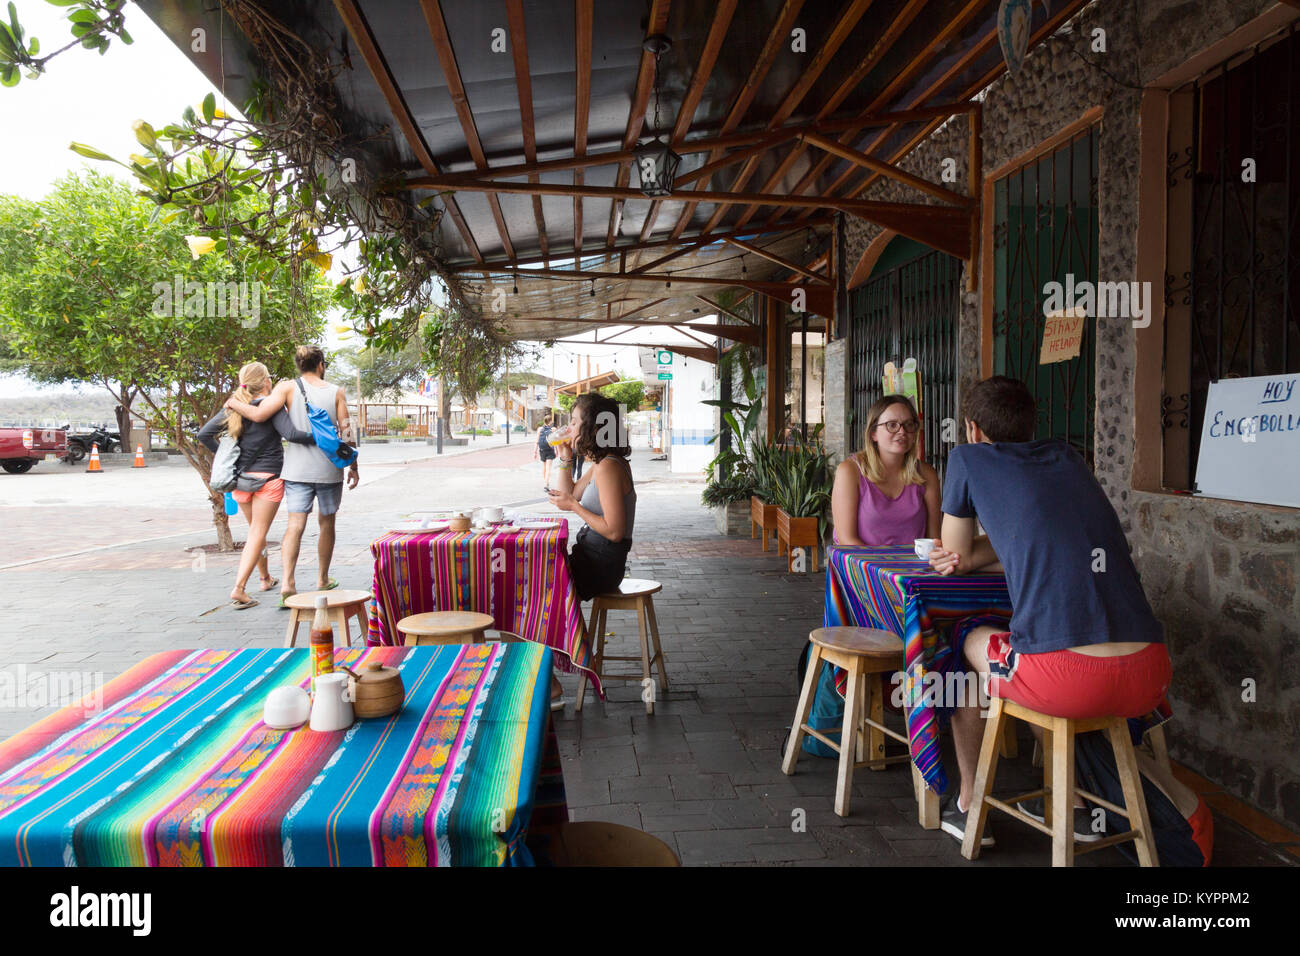 Galapagos cafe - people sitting at a street cafe, San Cristobal town, San Cristobal, Galapagos Islands, Ecuador South America Stock Photo